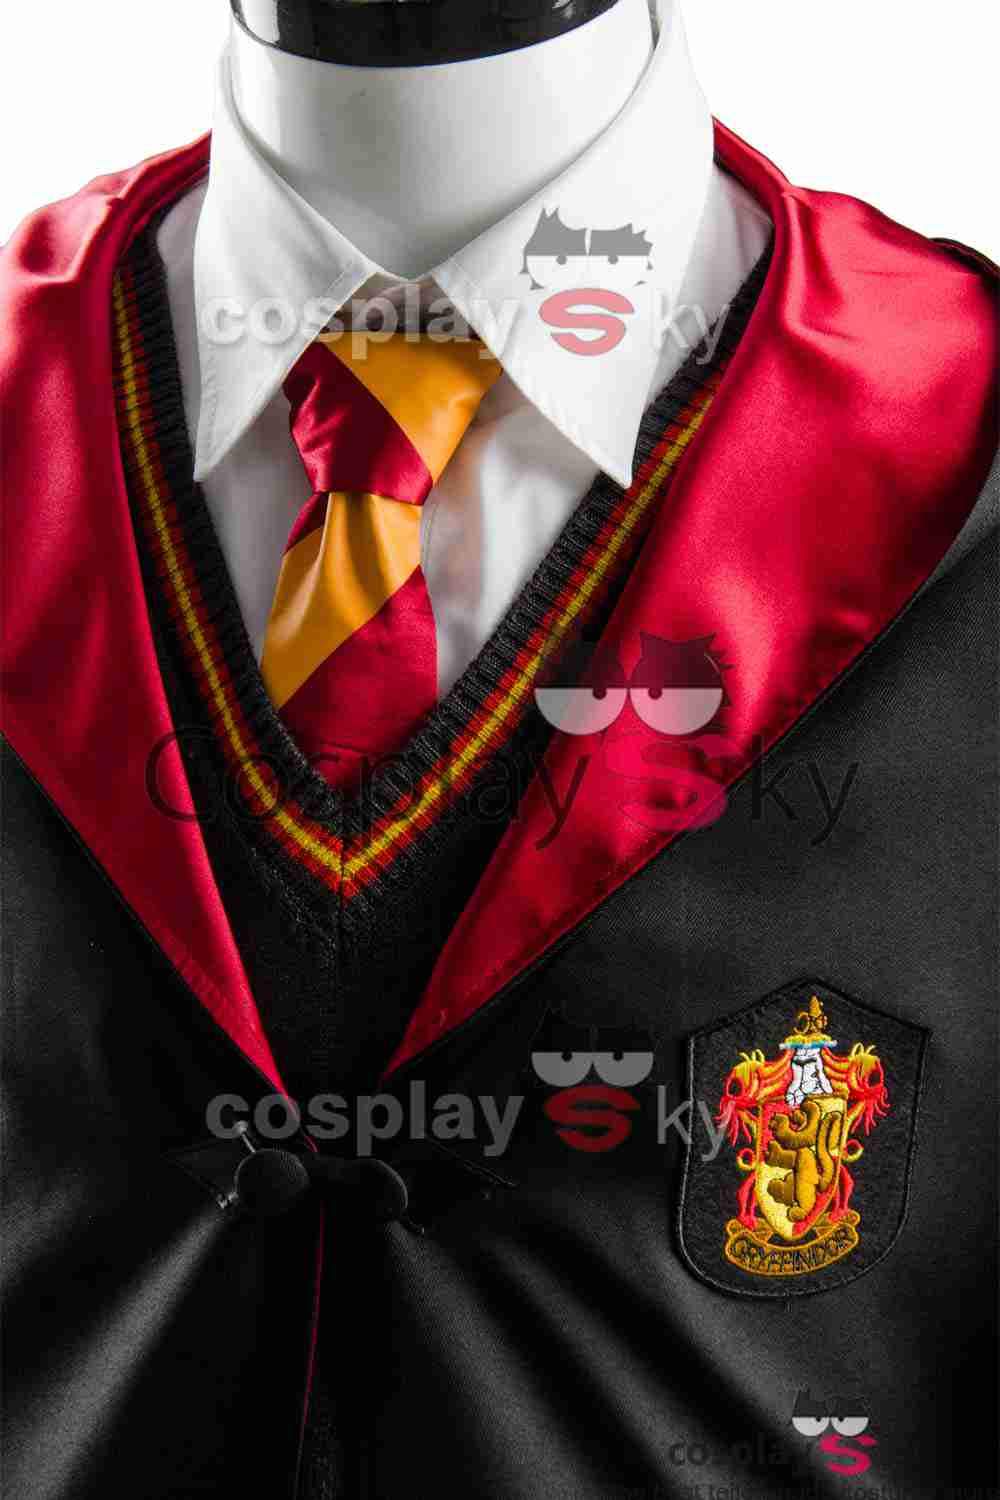 Harry Potter Gryffindor Robe Uniform Harry Potter Cosplay Costume Adults Ver.